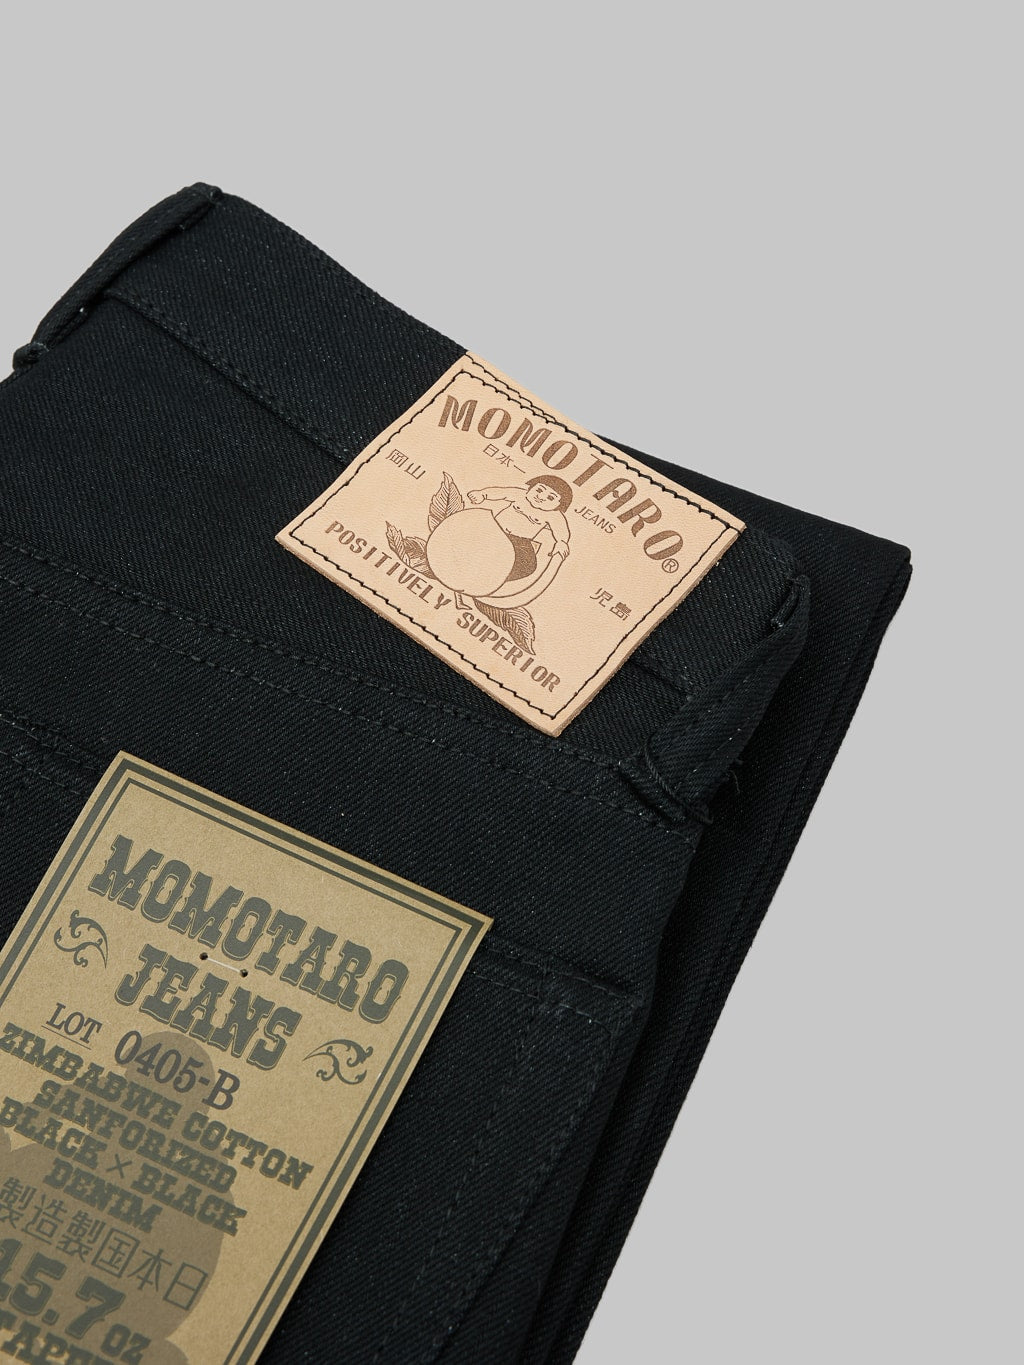 momotaro 0405b selvedge black denim high tapered jeans leather patch